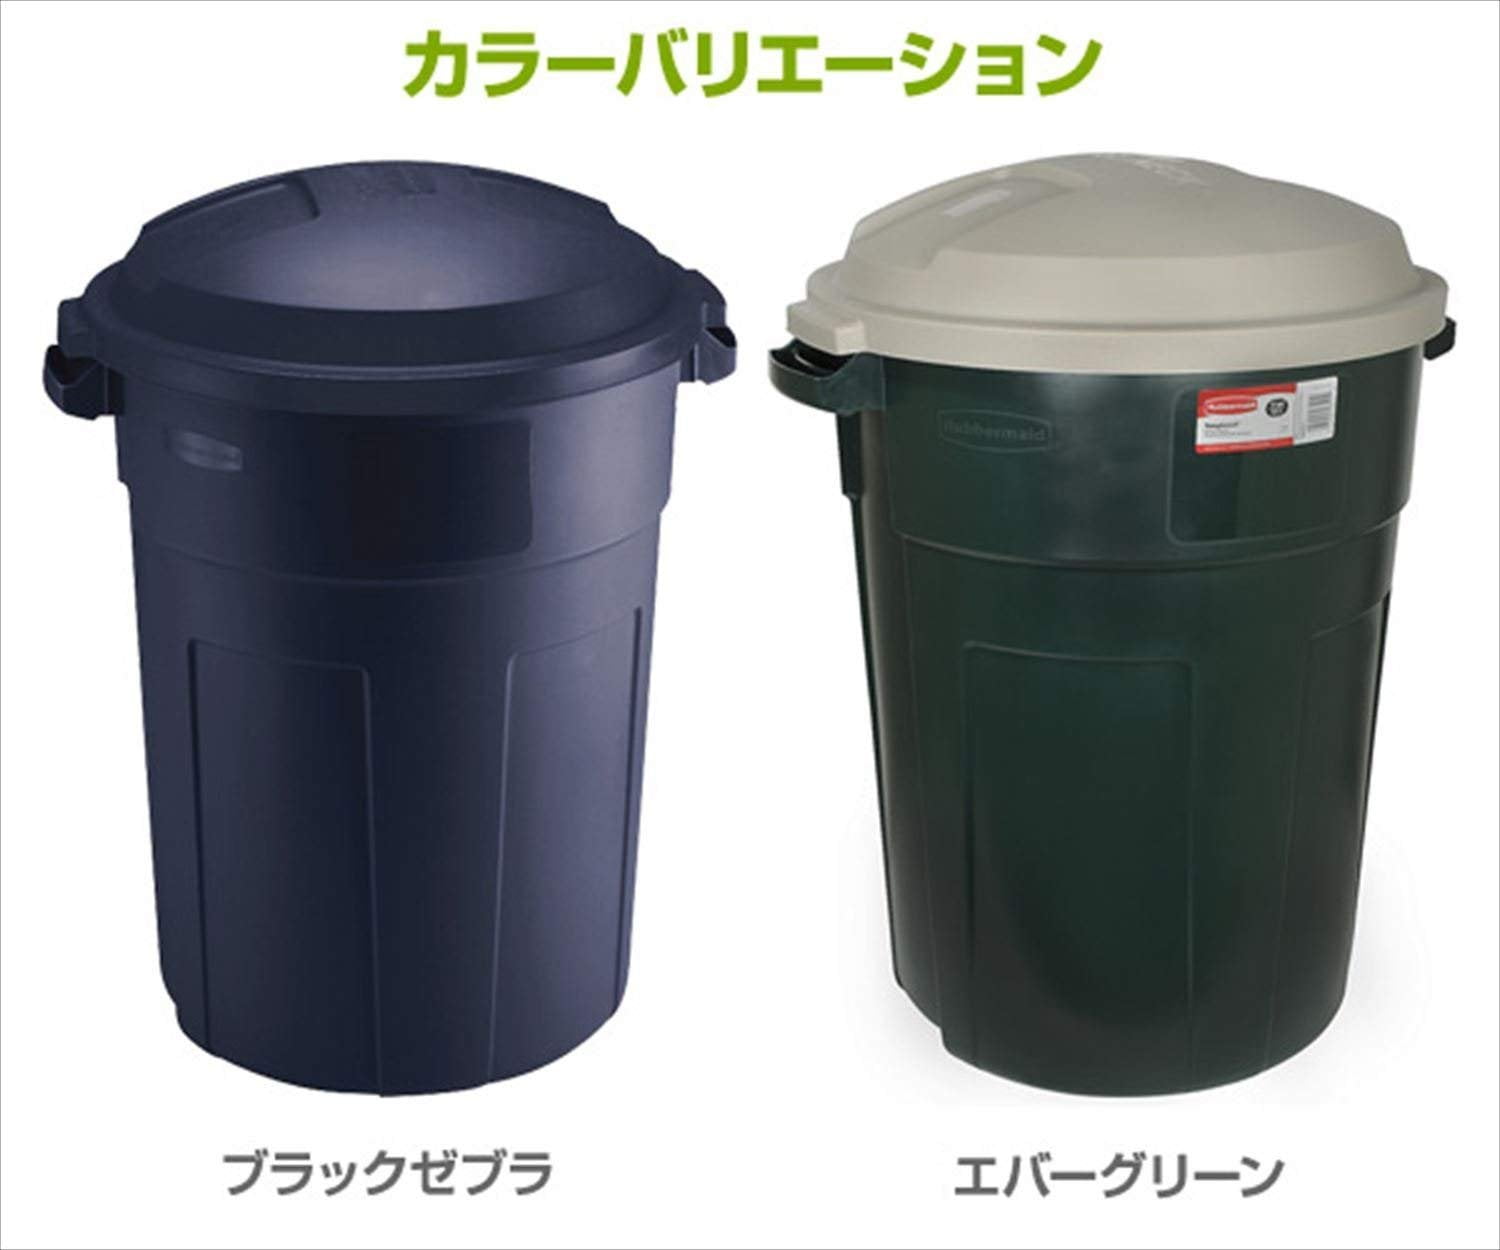 Rubbermaid Roughneck 30-Gallon Evergreen Plastic Trash Can